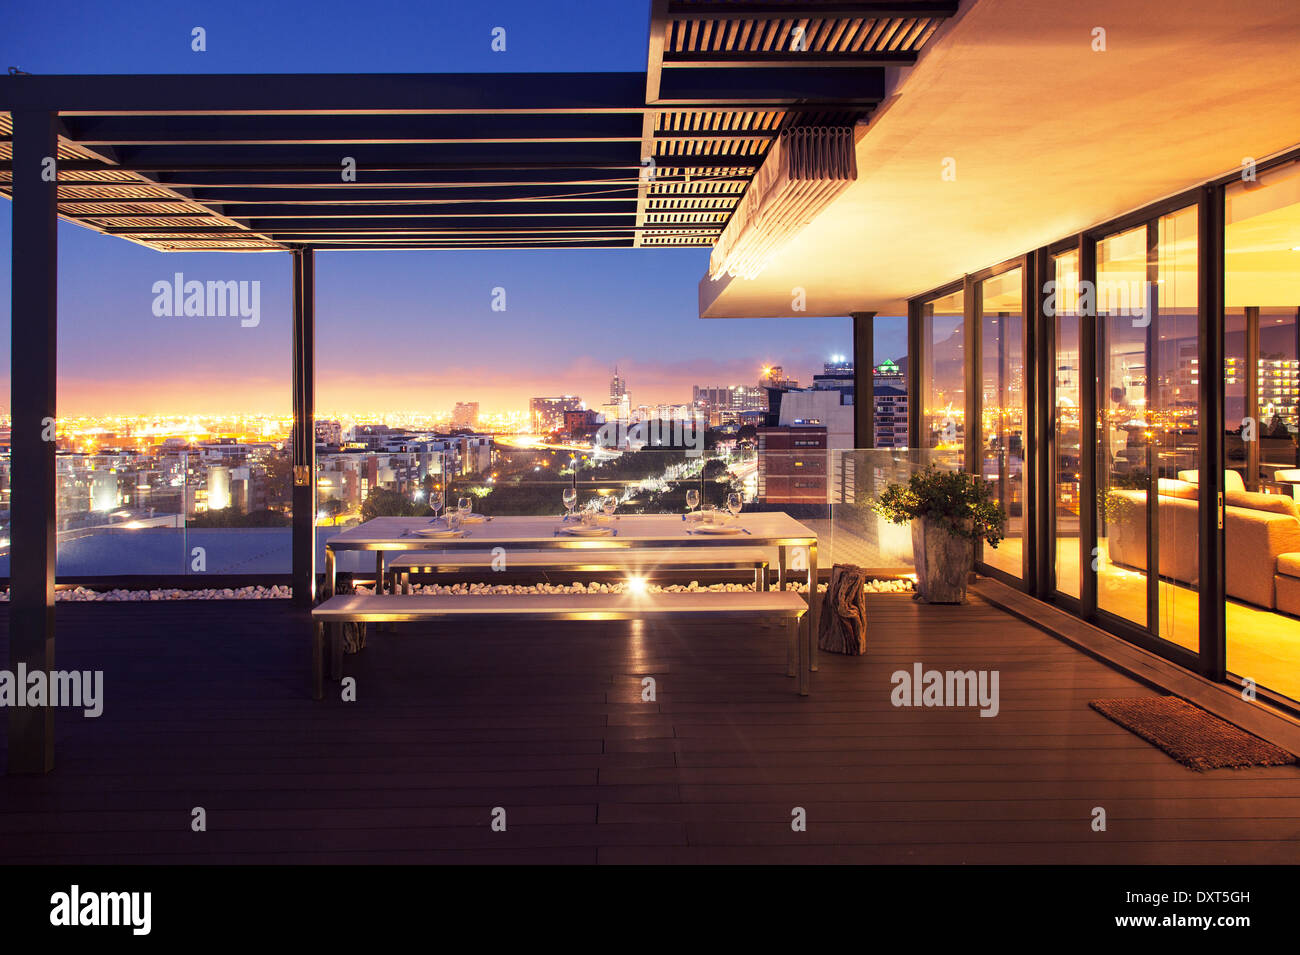 Illuminated luxury house and patio overlooking city Stock Photo